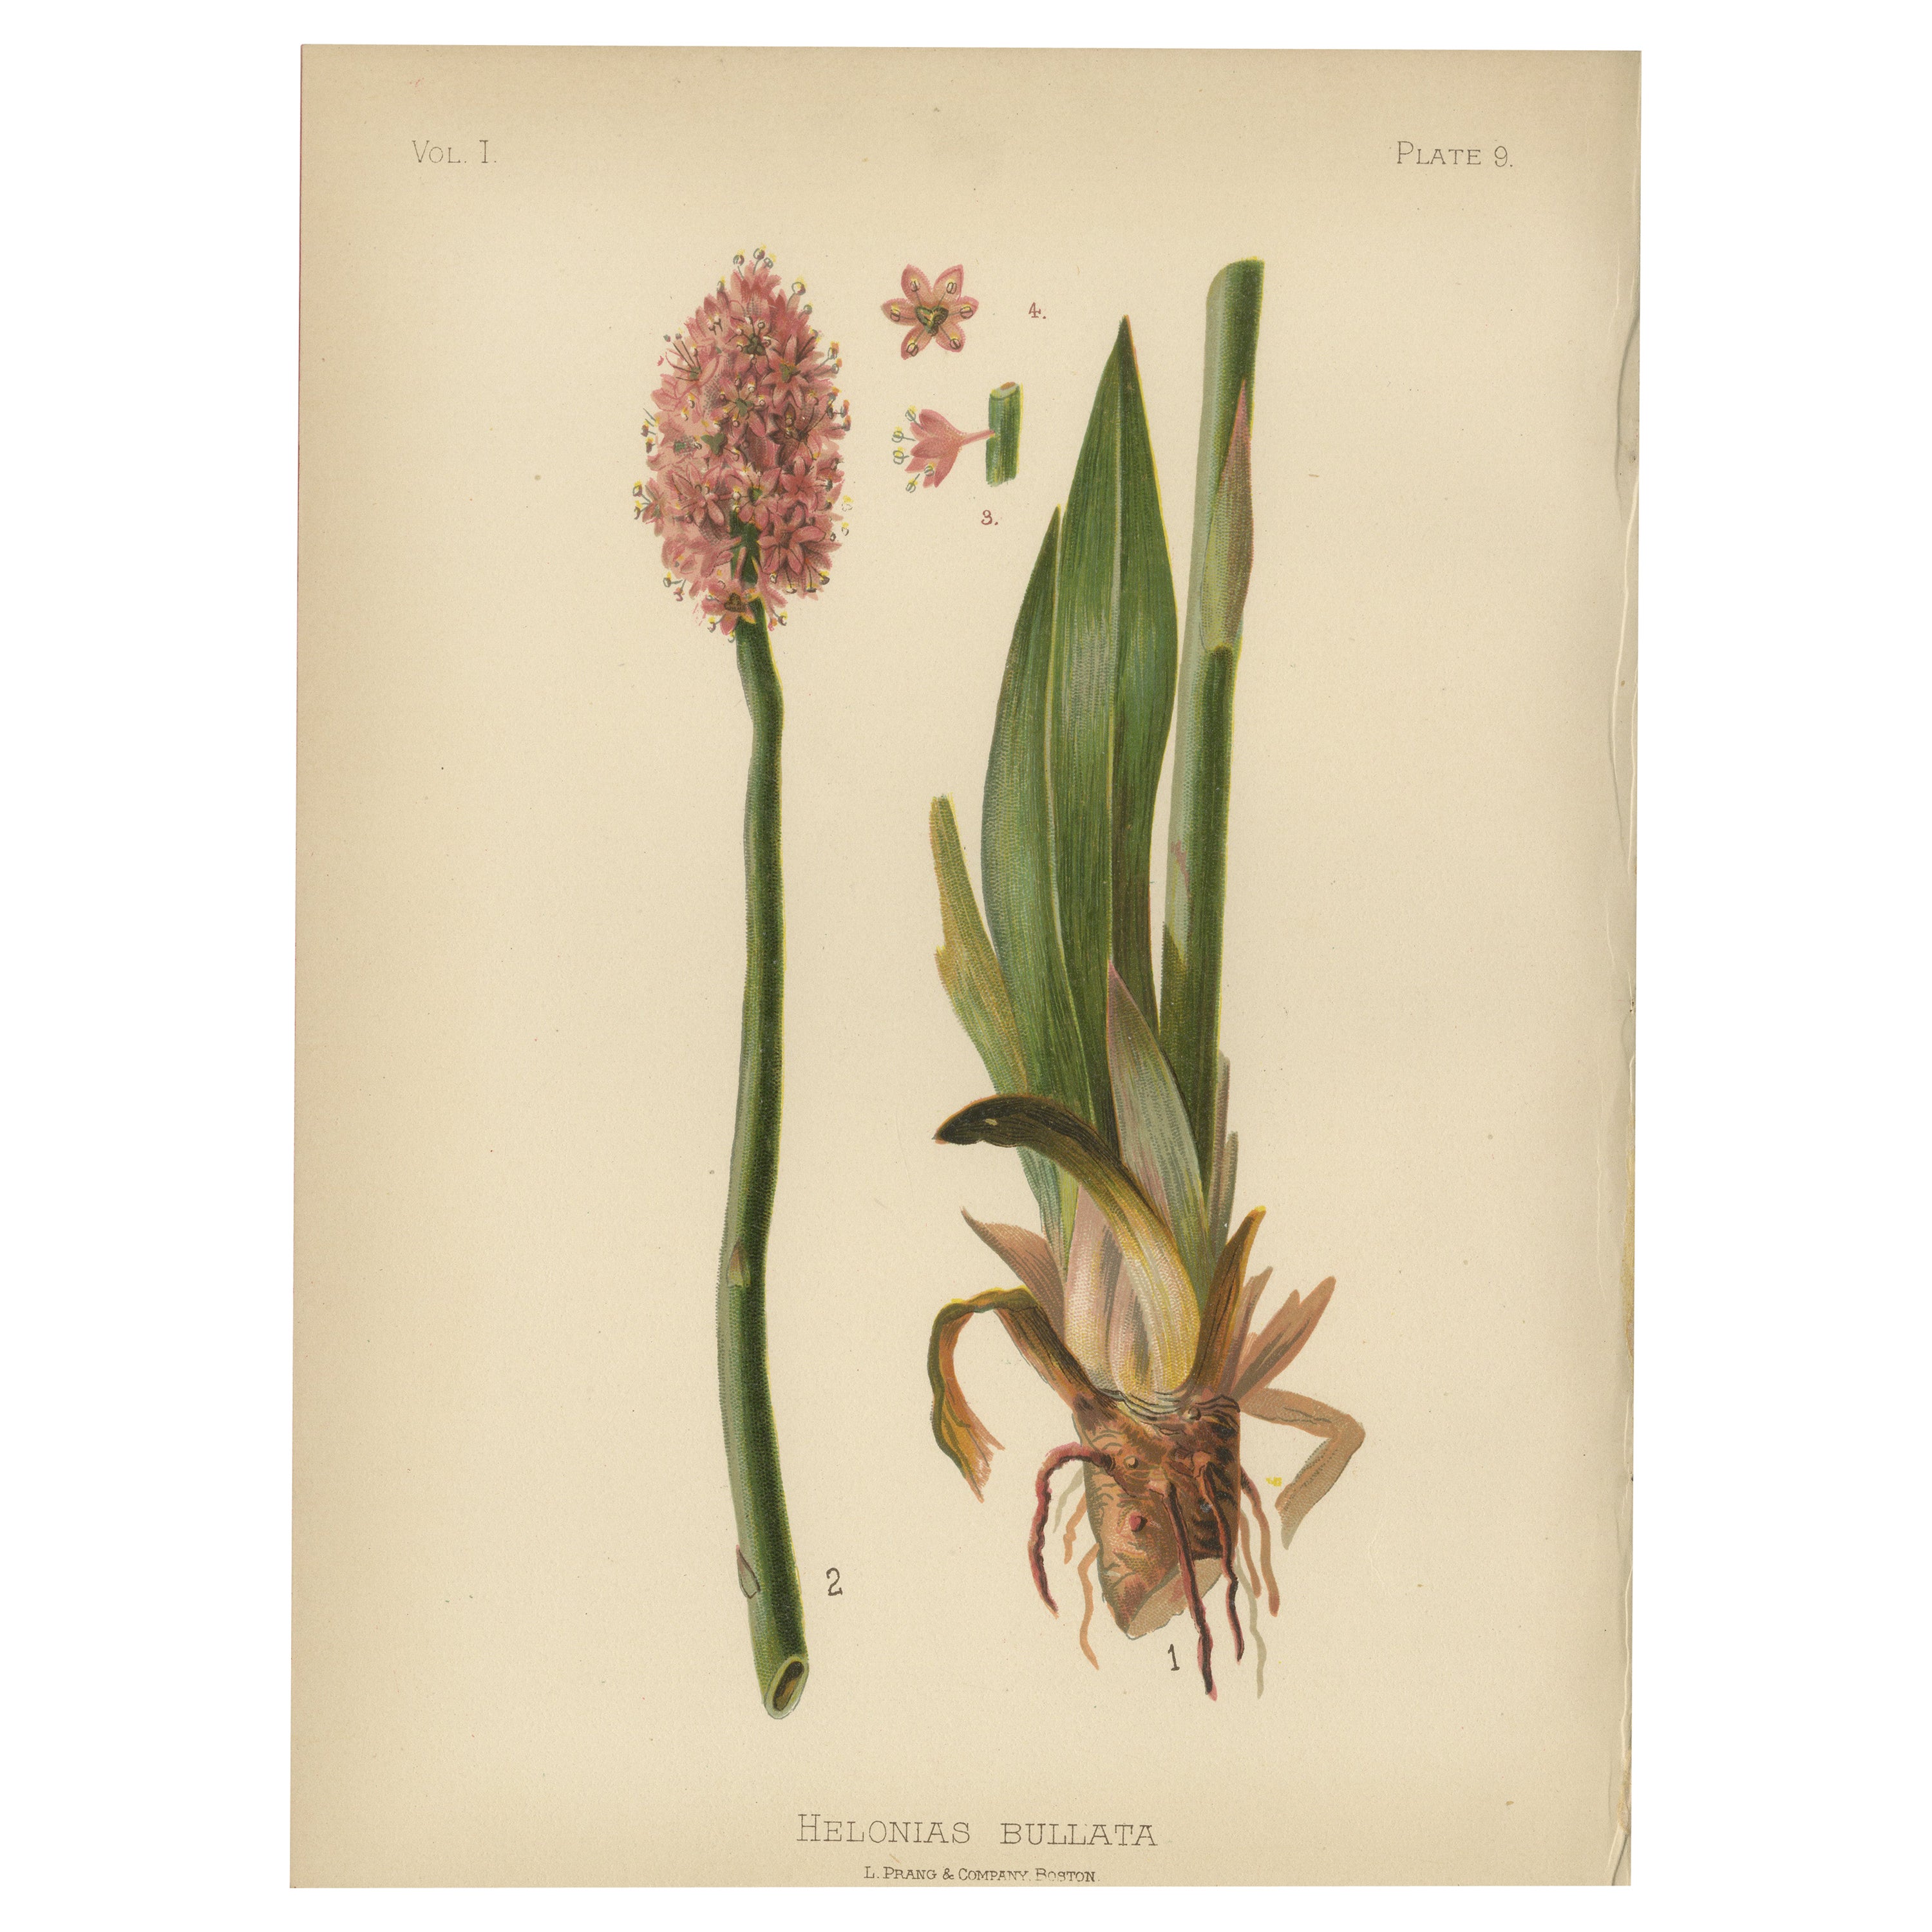 Swamp Pink Splendor: Helonias bullata, 1879